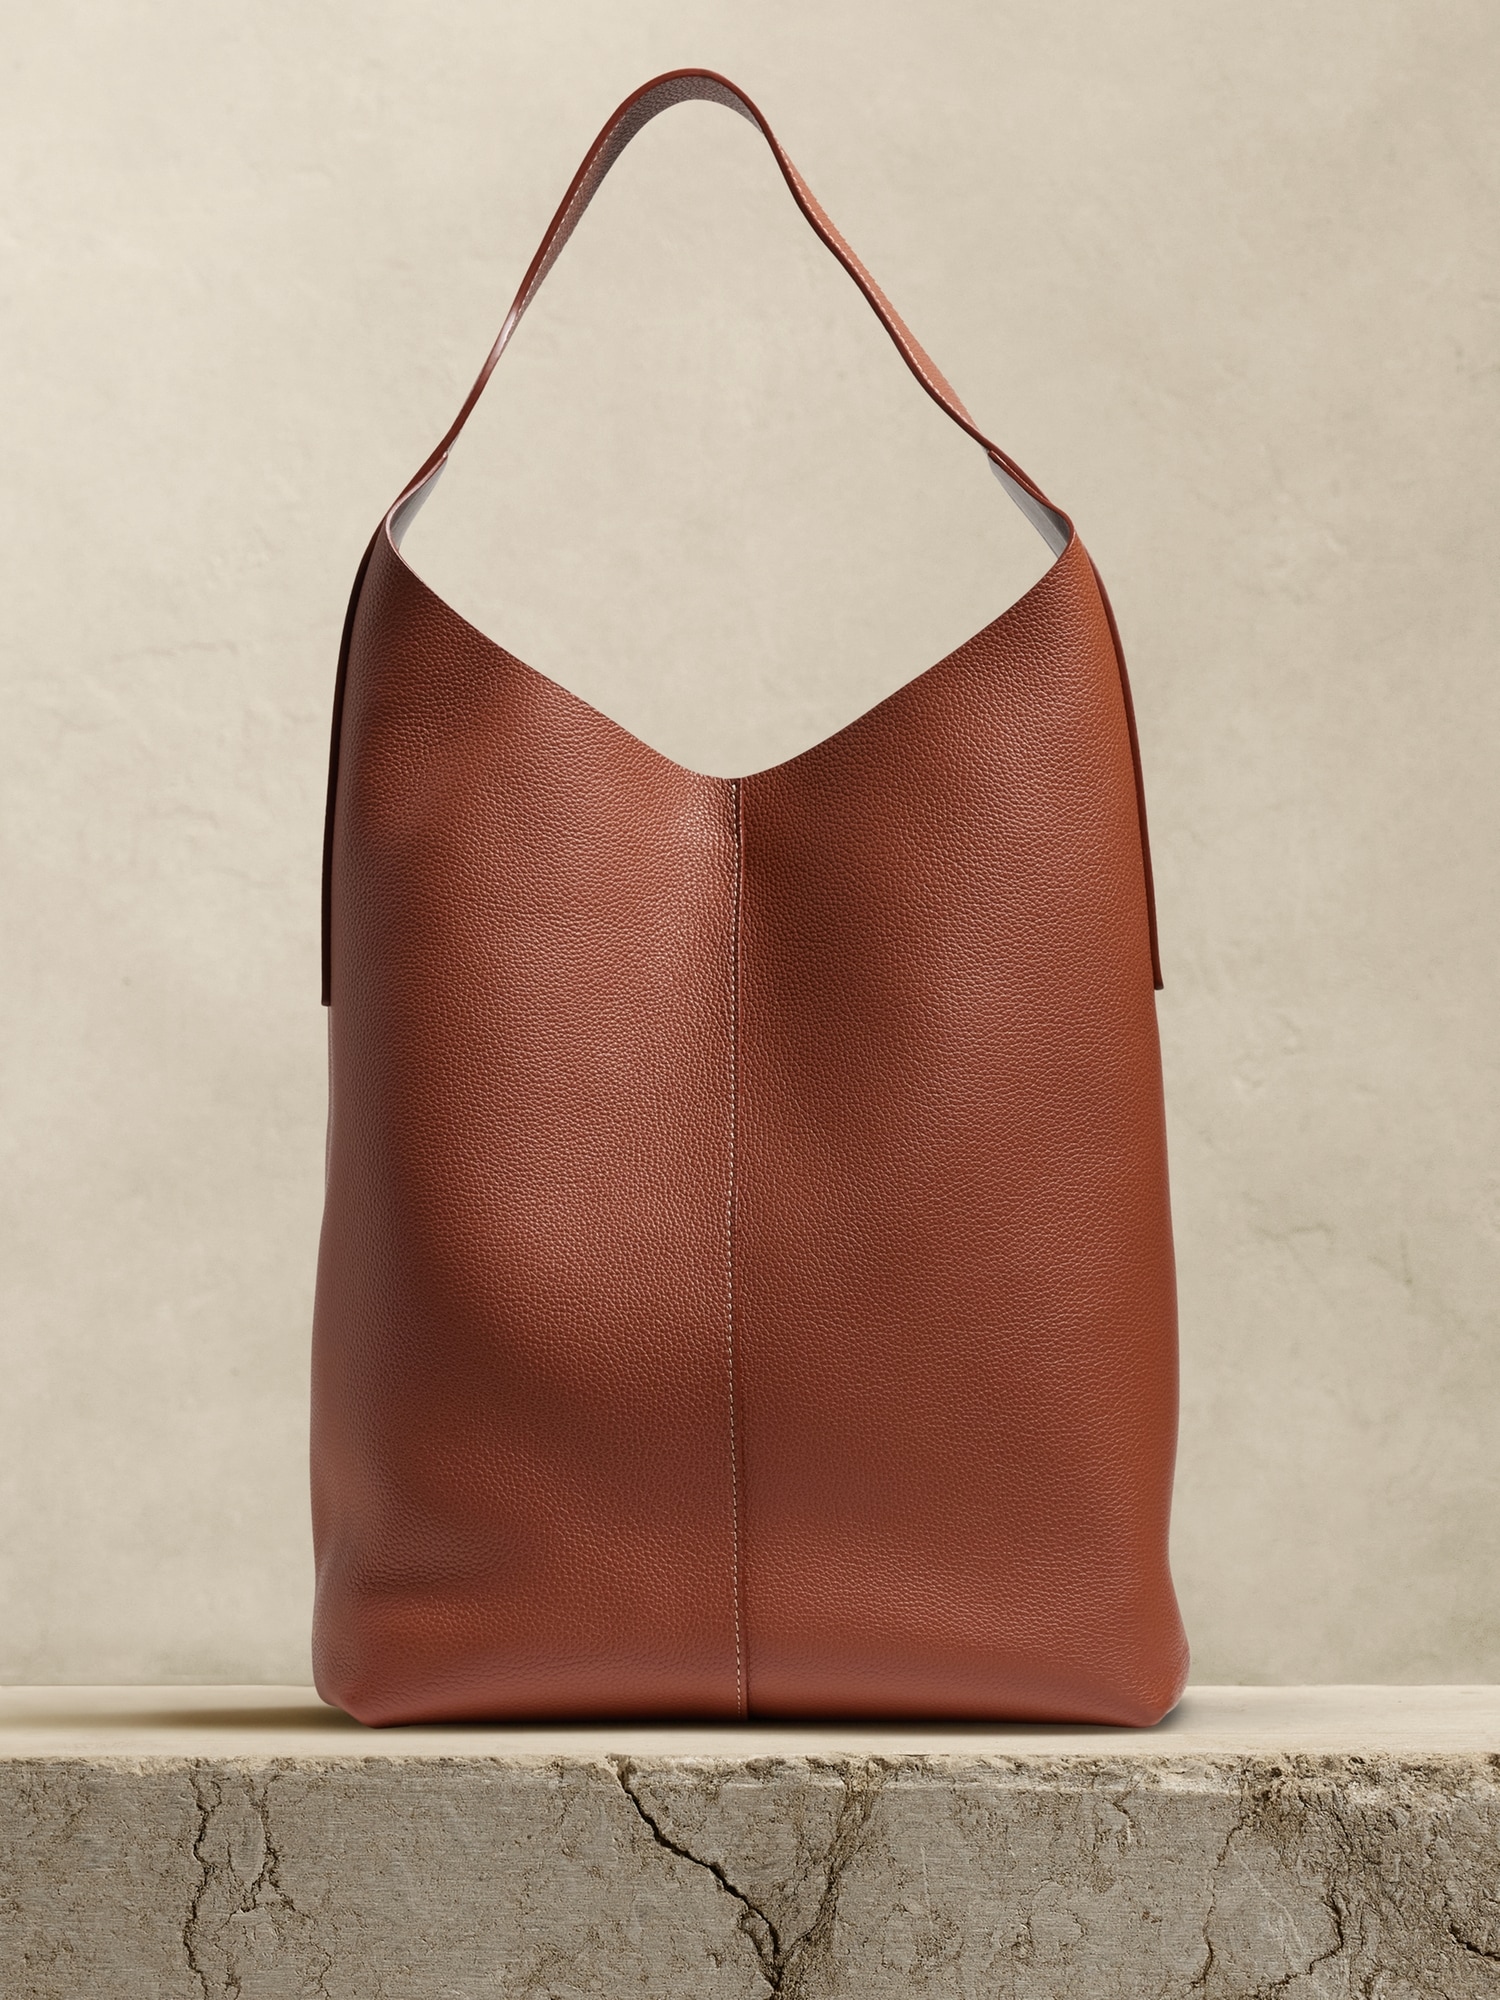 Big Buddha Large geometric Bronze Metallic Large slouchy hobo bag shoulder  purse | Slouchy hobo bag, Hobo bag, Shoulder purse